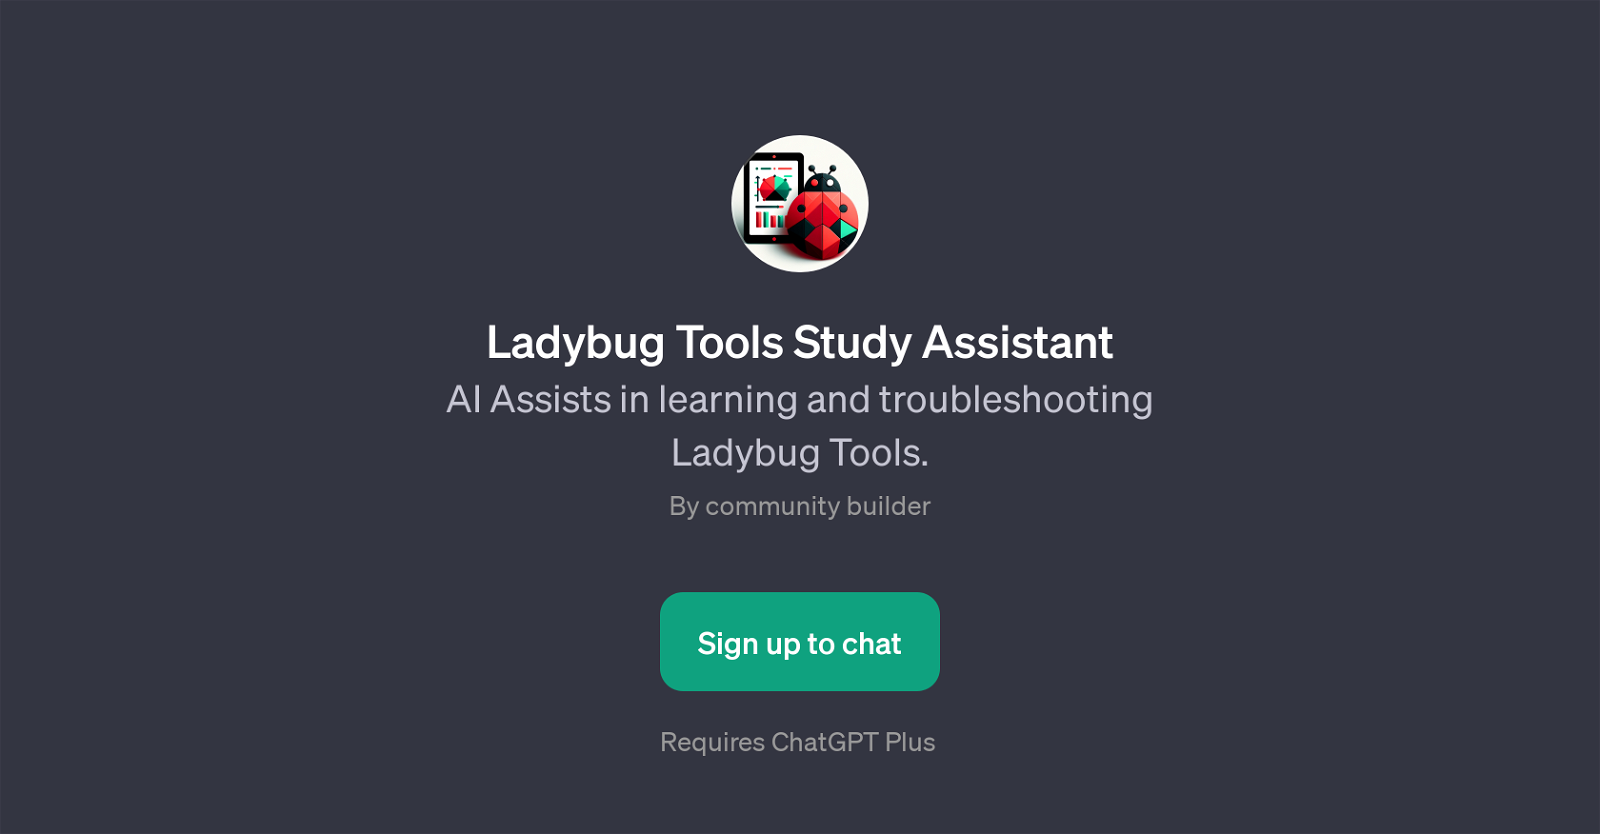 Ladybug Tools Study Assistant website